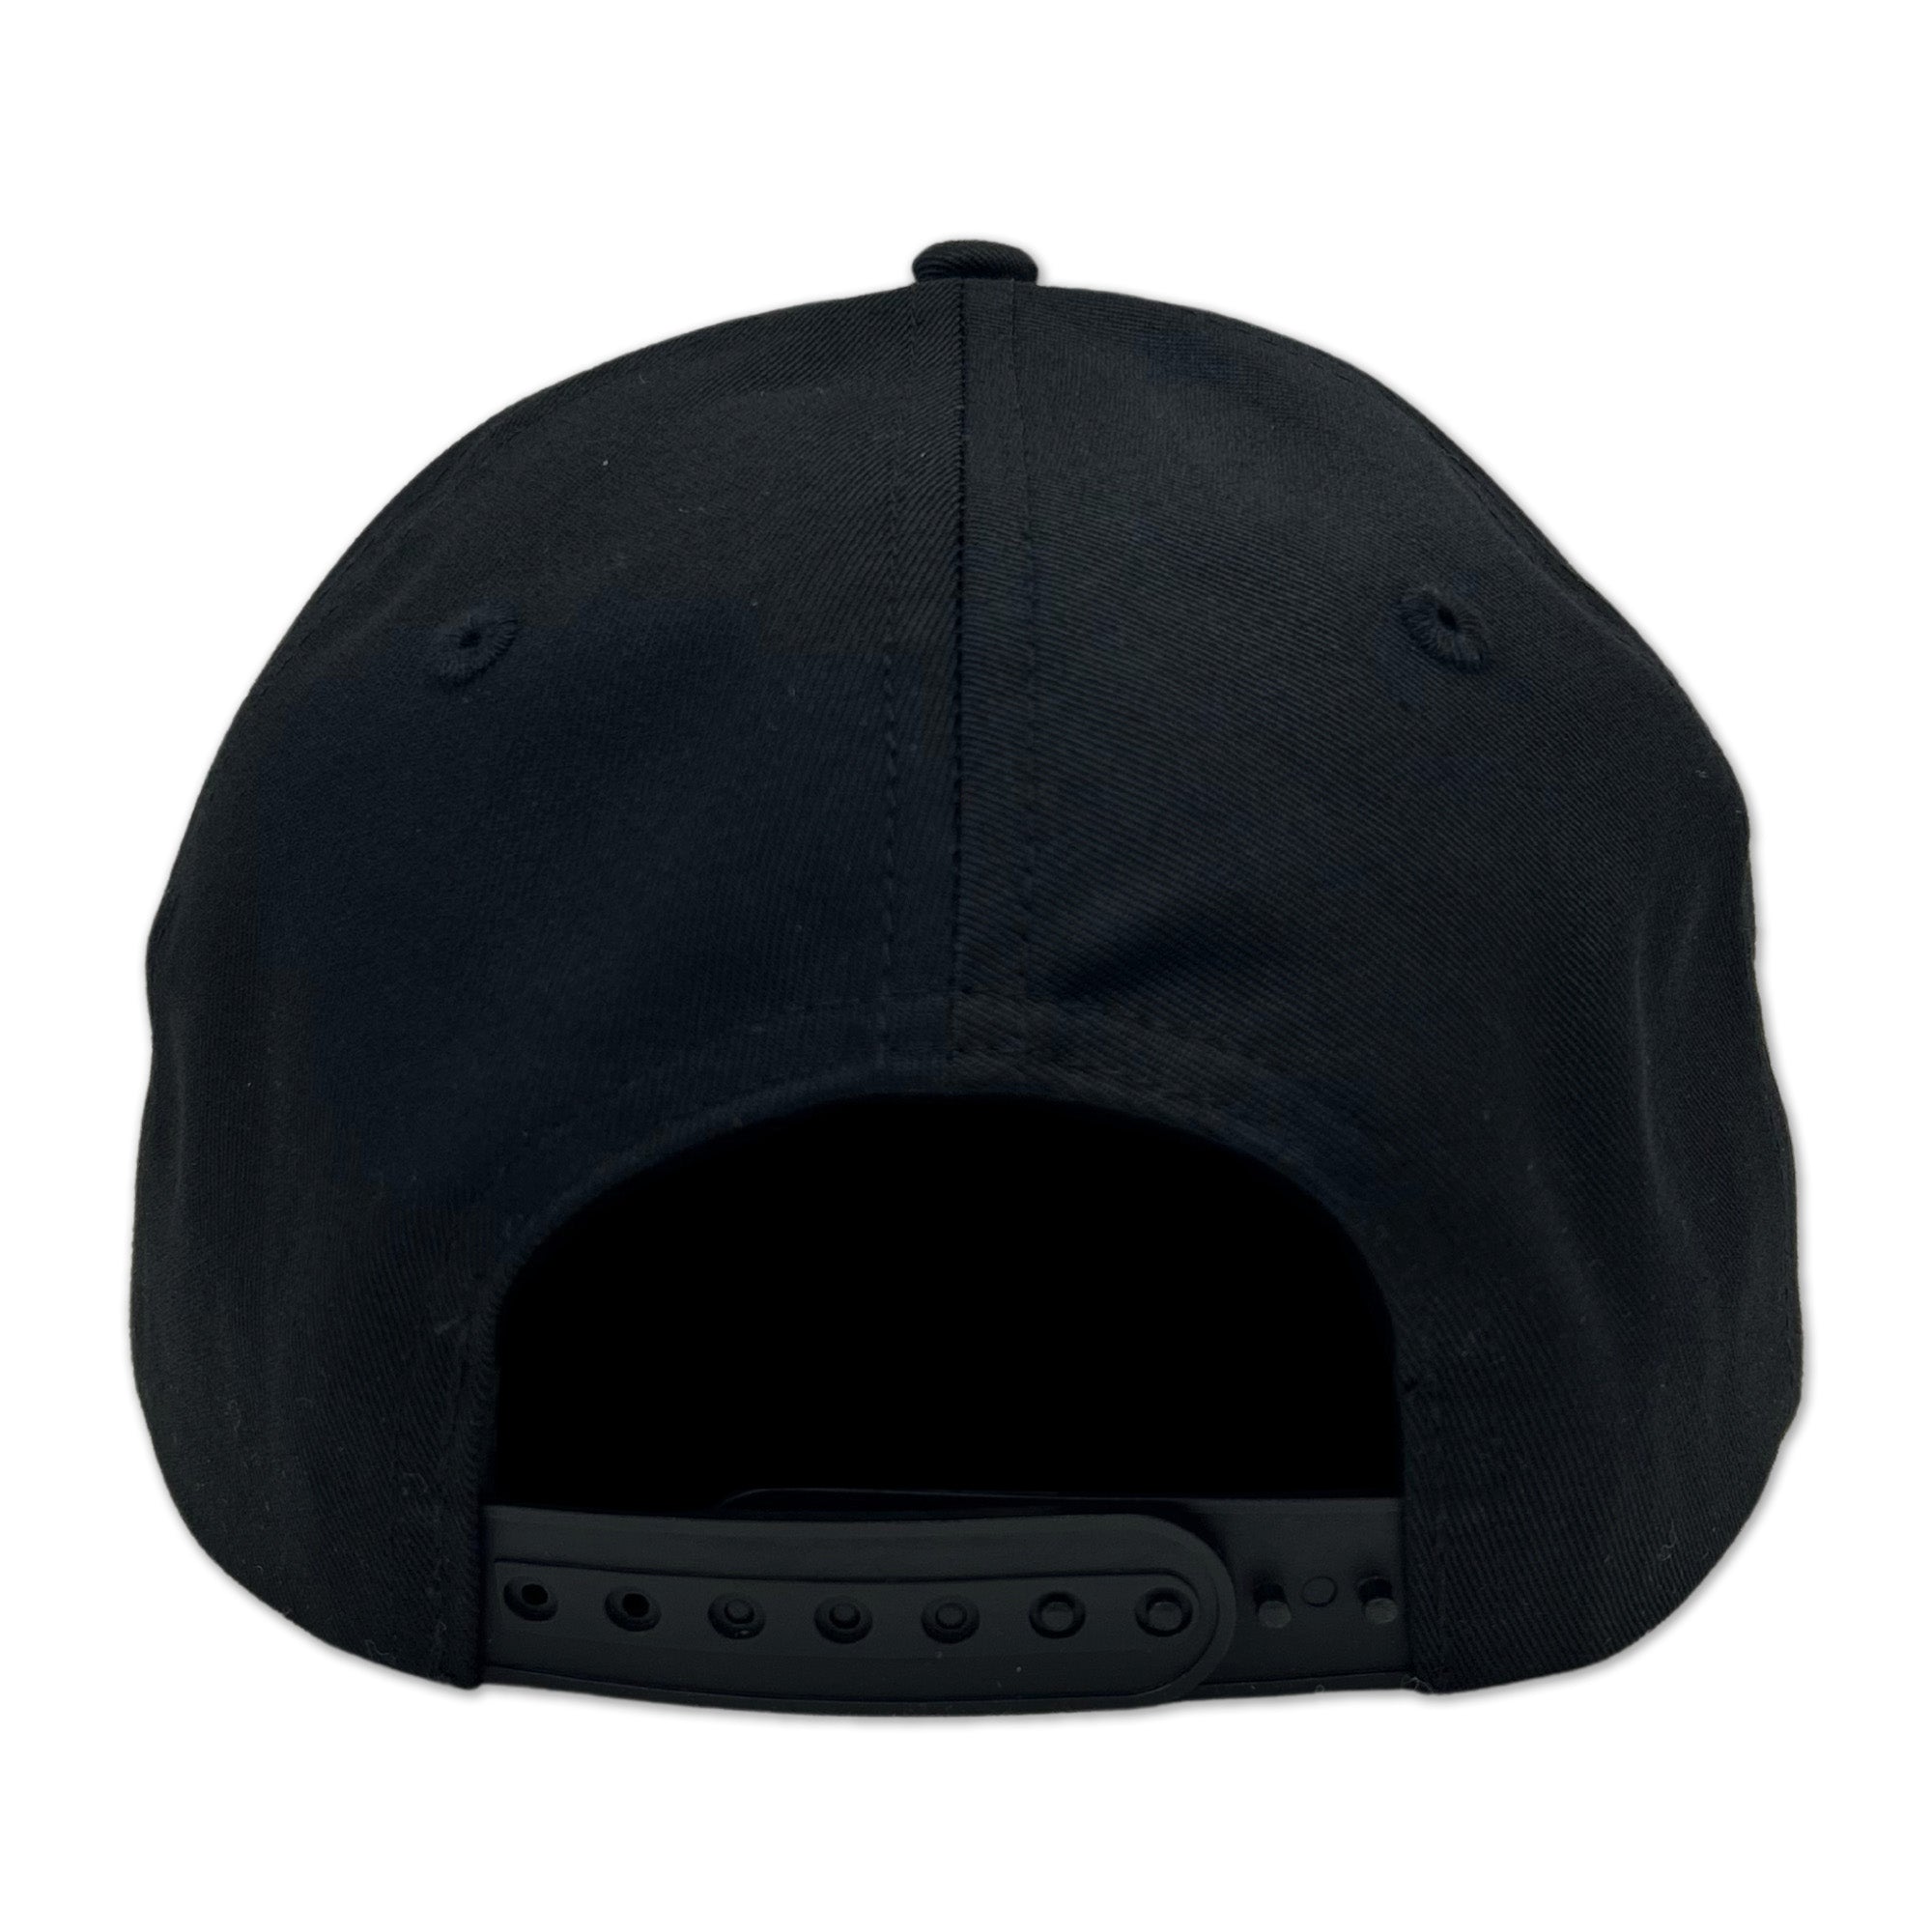 Marines 3D EGA Hat (Black)